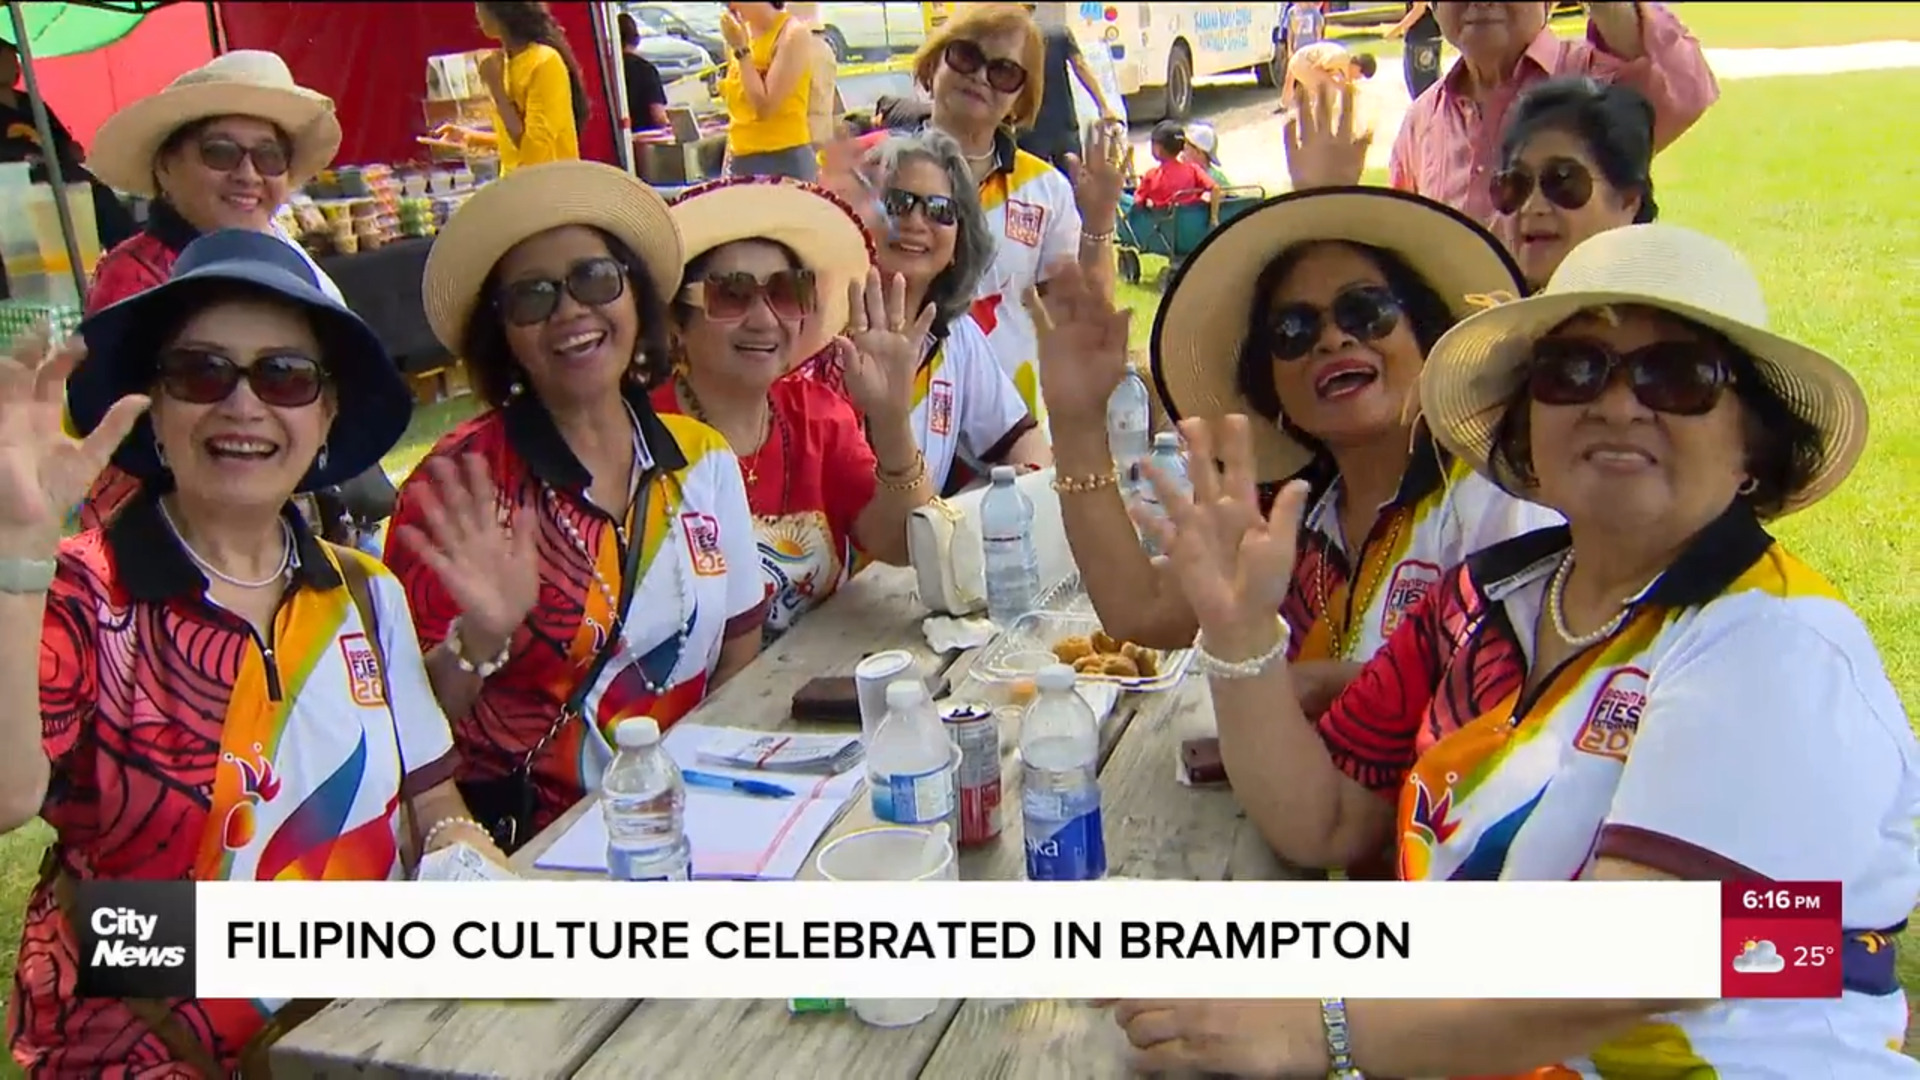 Festivals in Brampton, Toronto celebrate Asian cultures